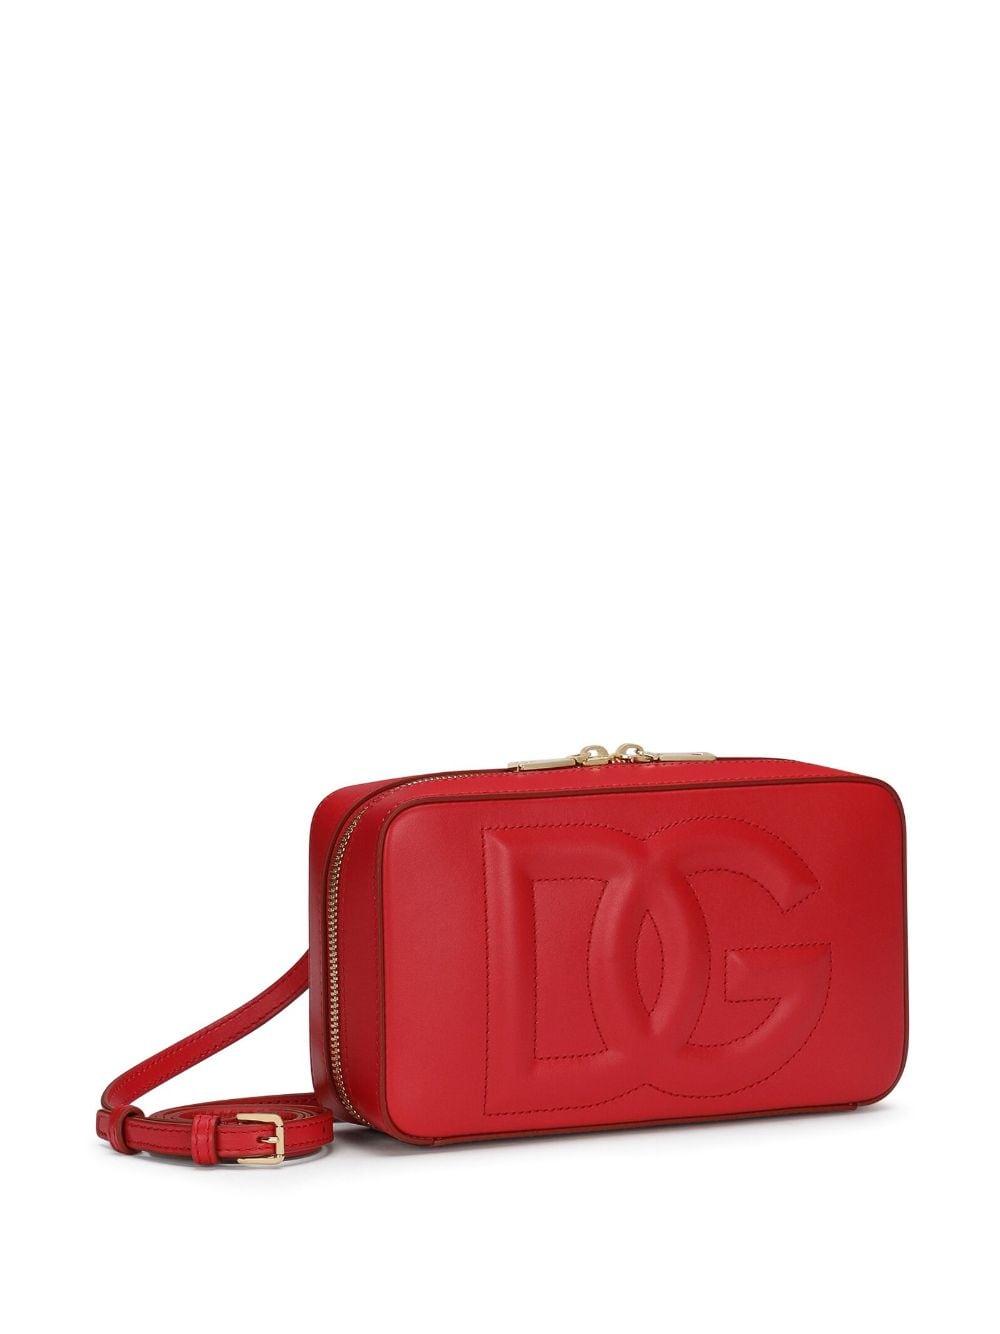 Dolce & Gabbana Small Dg Logo Camera Bag in Red